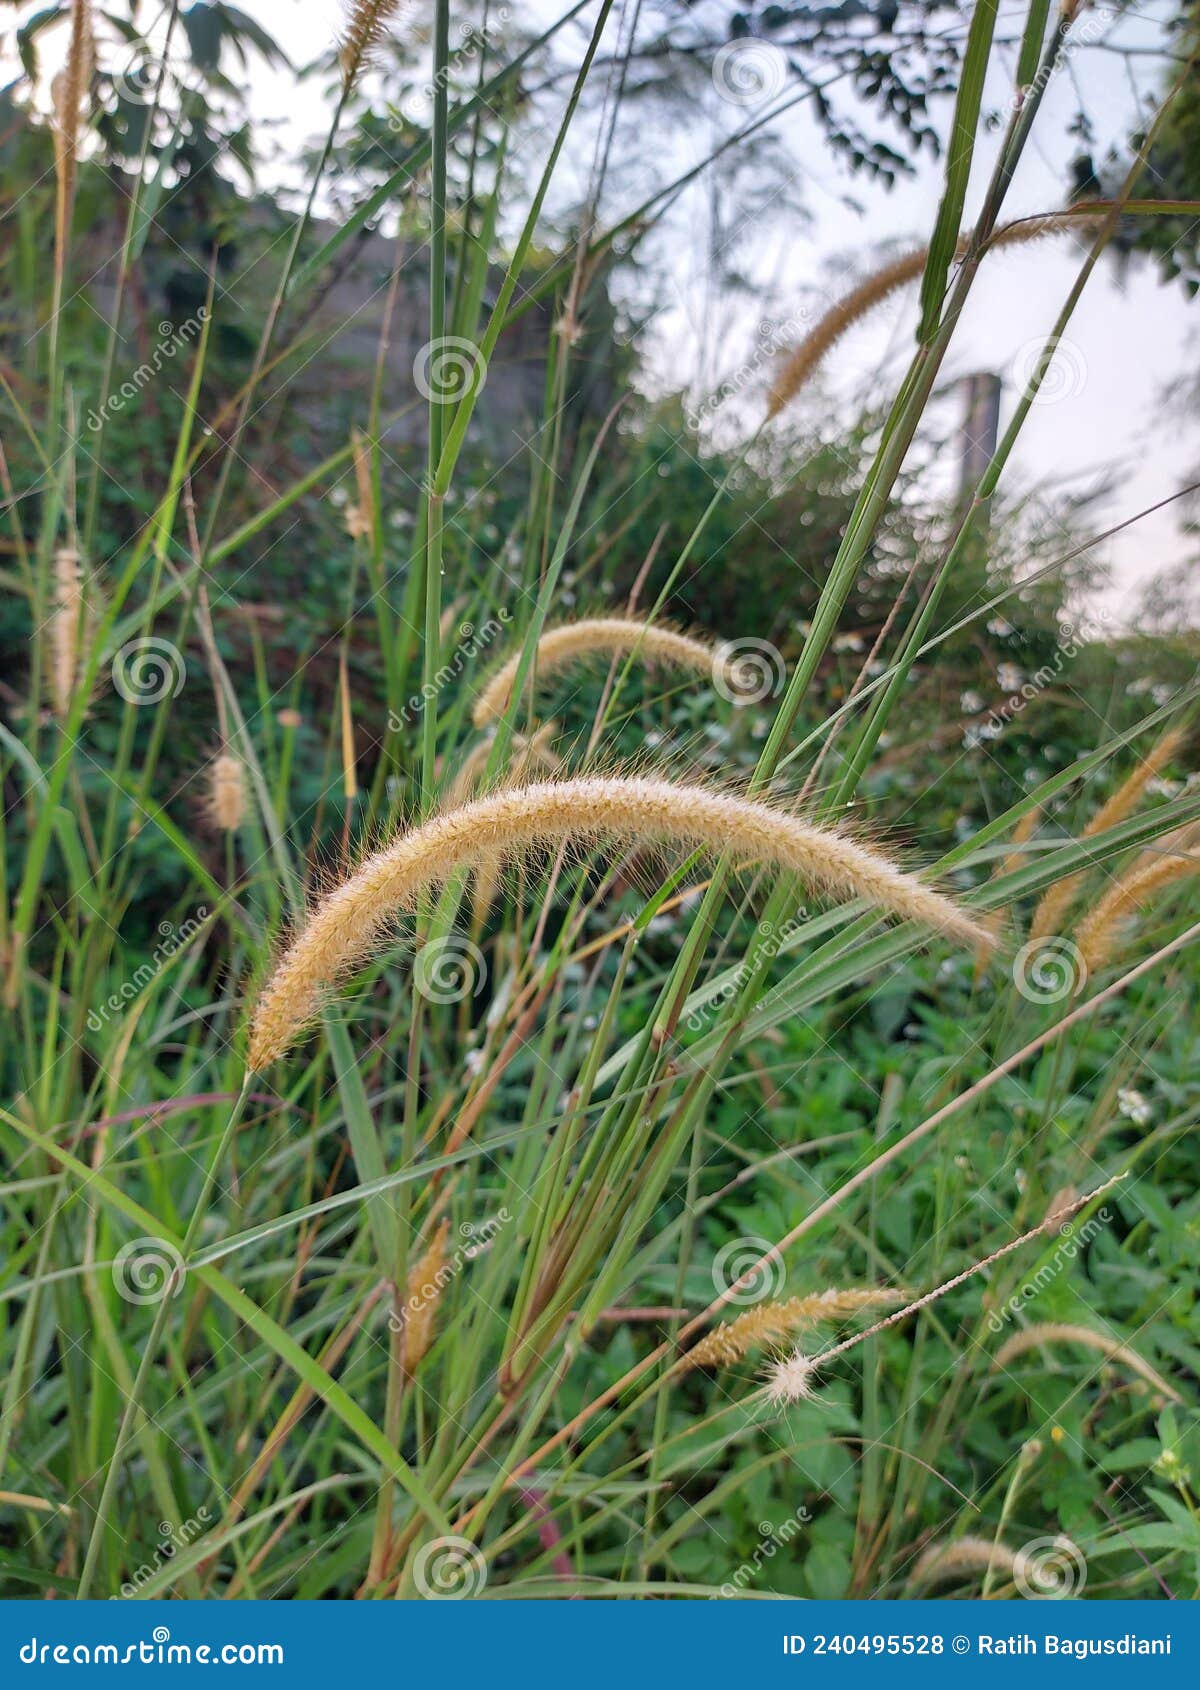 ilalang rumput liar or setaria viridis or cogon grass or setaria faberi or fountaingrasses